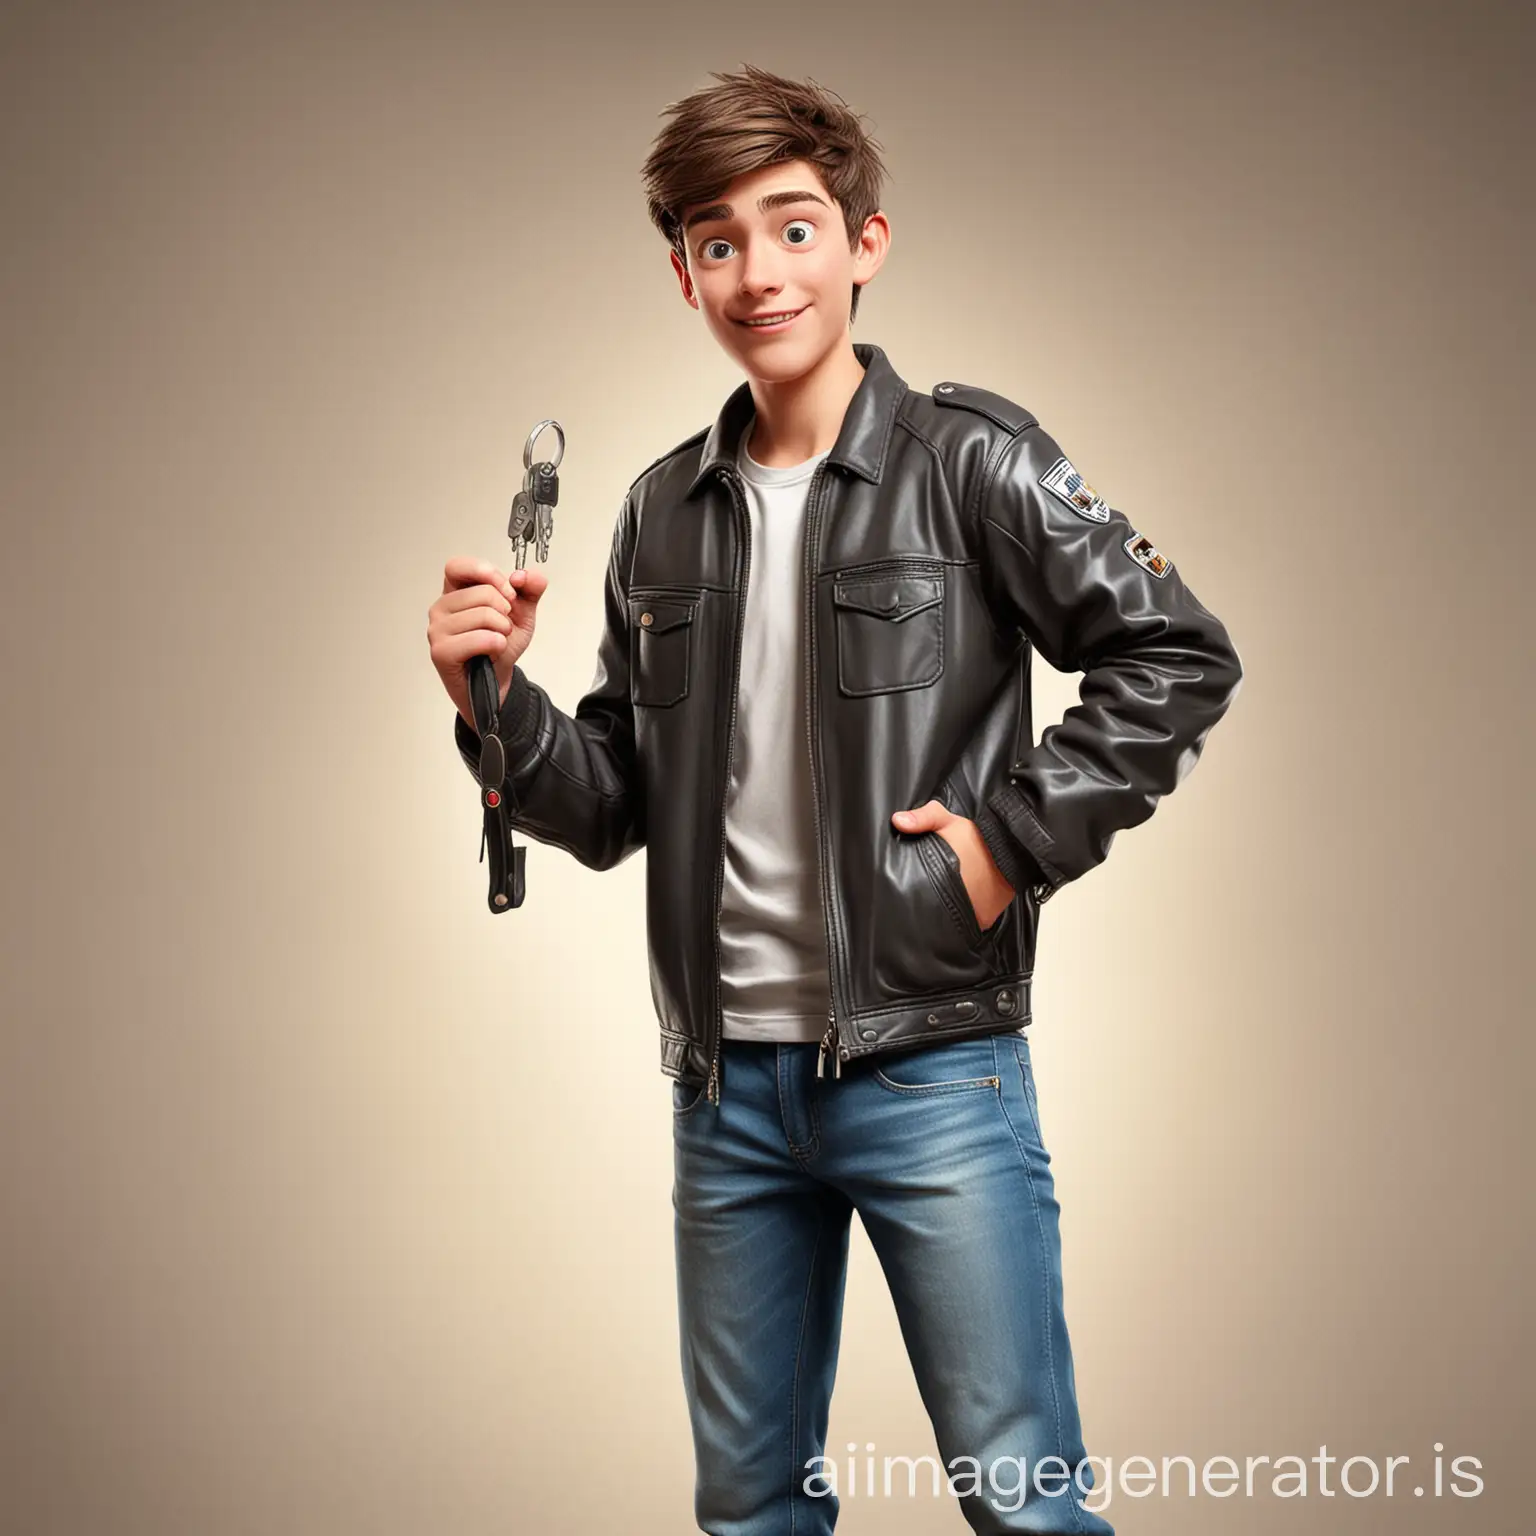 Teenage-Boy-in-Motorbike-Jacket-Holding-Key-Cartoon-Illustration